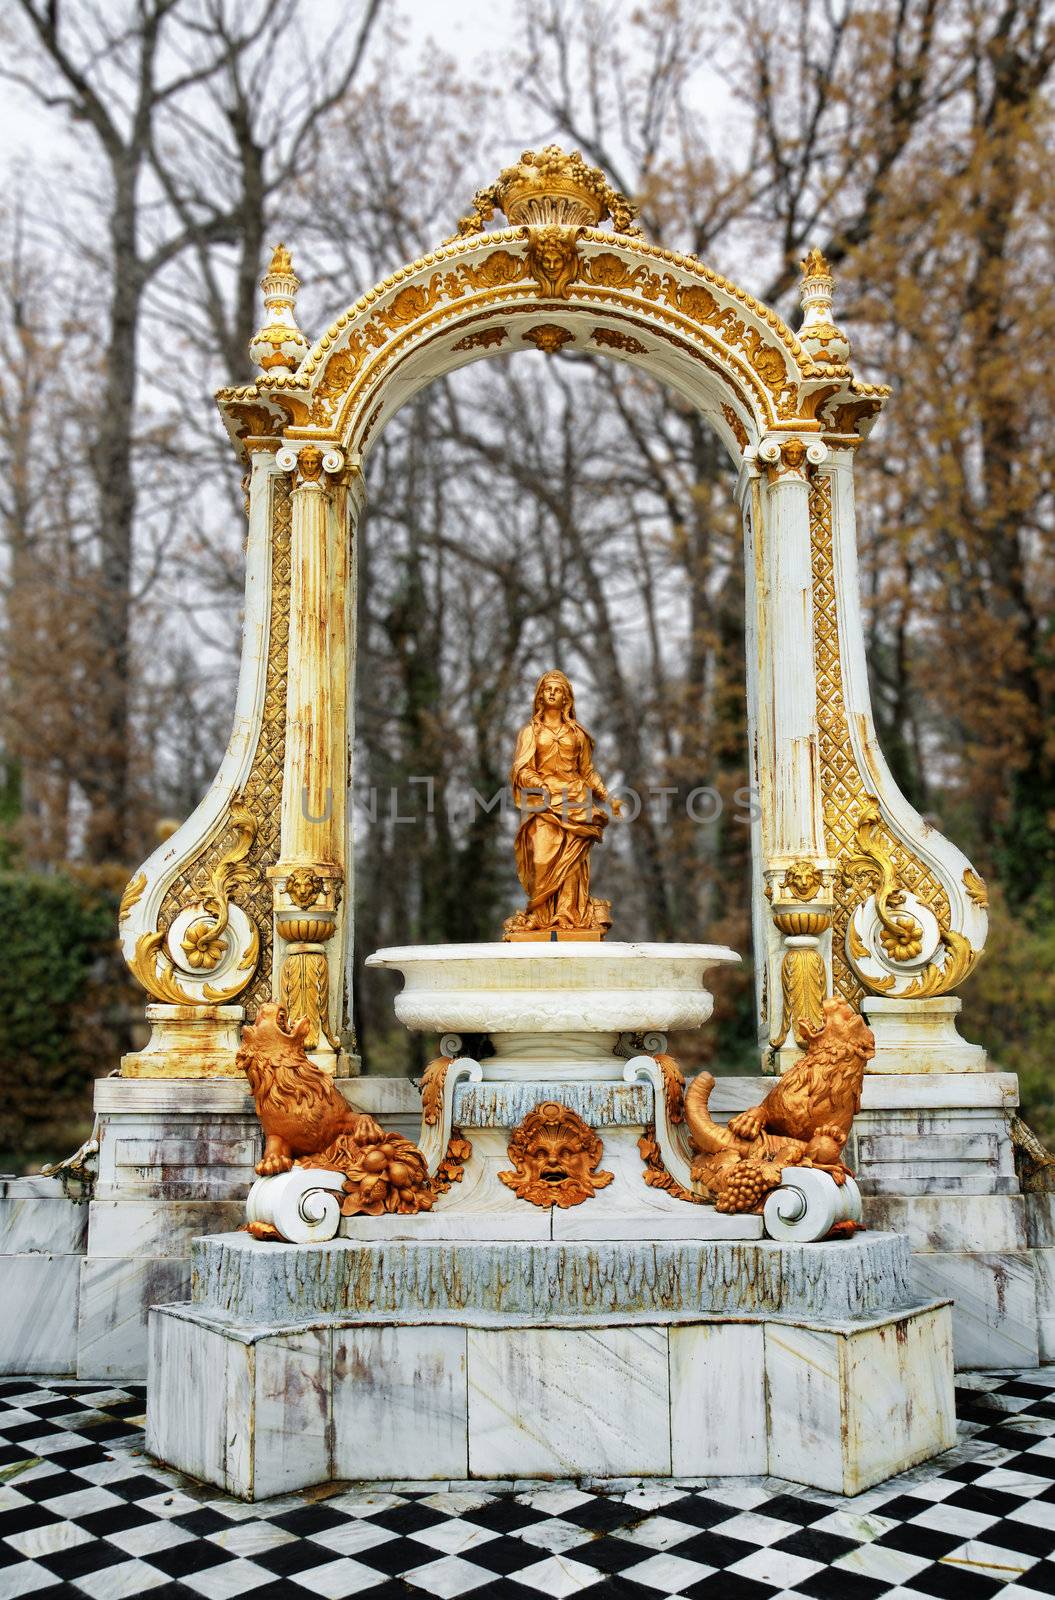 Fountain at palace gardens of La Granja de san Ildefonso , Segovia castile and Le�n Spain.